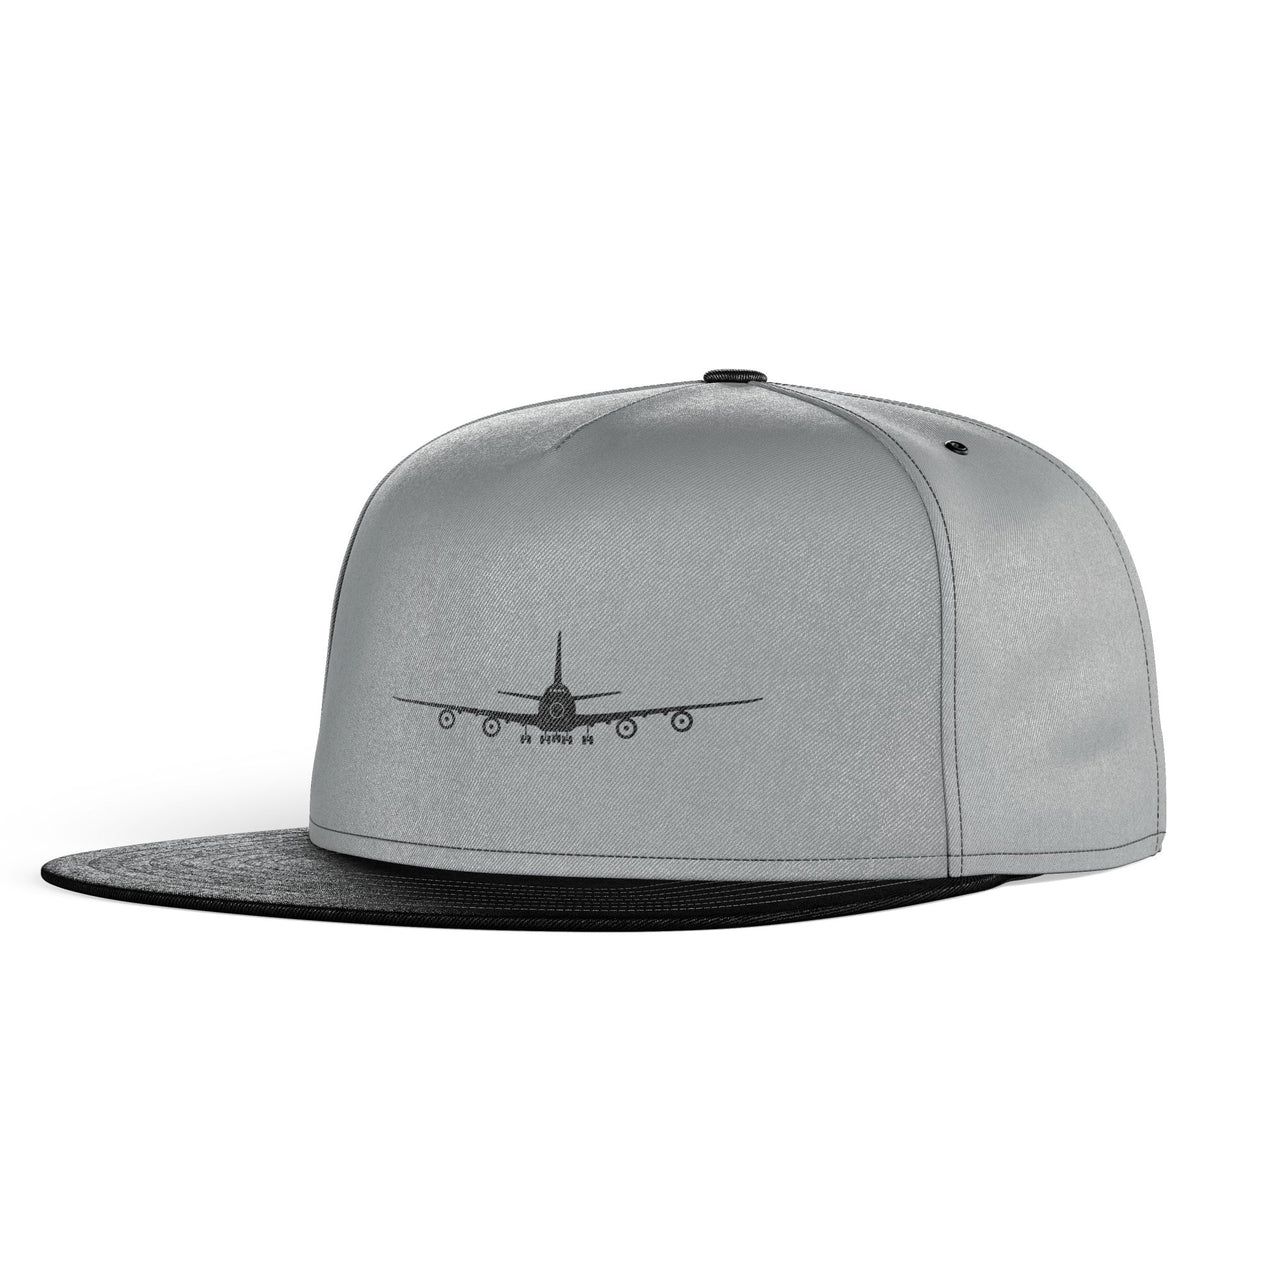 Boeing 747 Silhouette Designed Snapback Caps & Hats